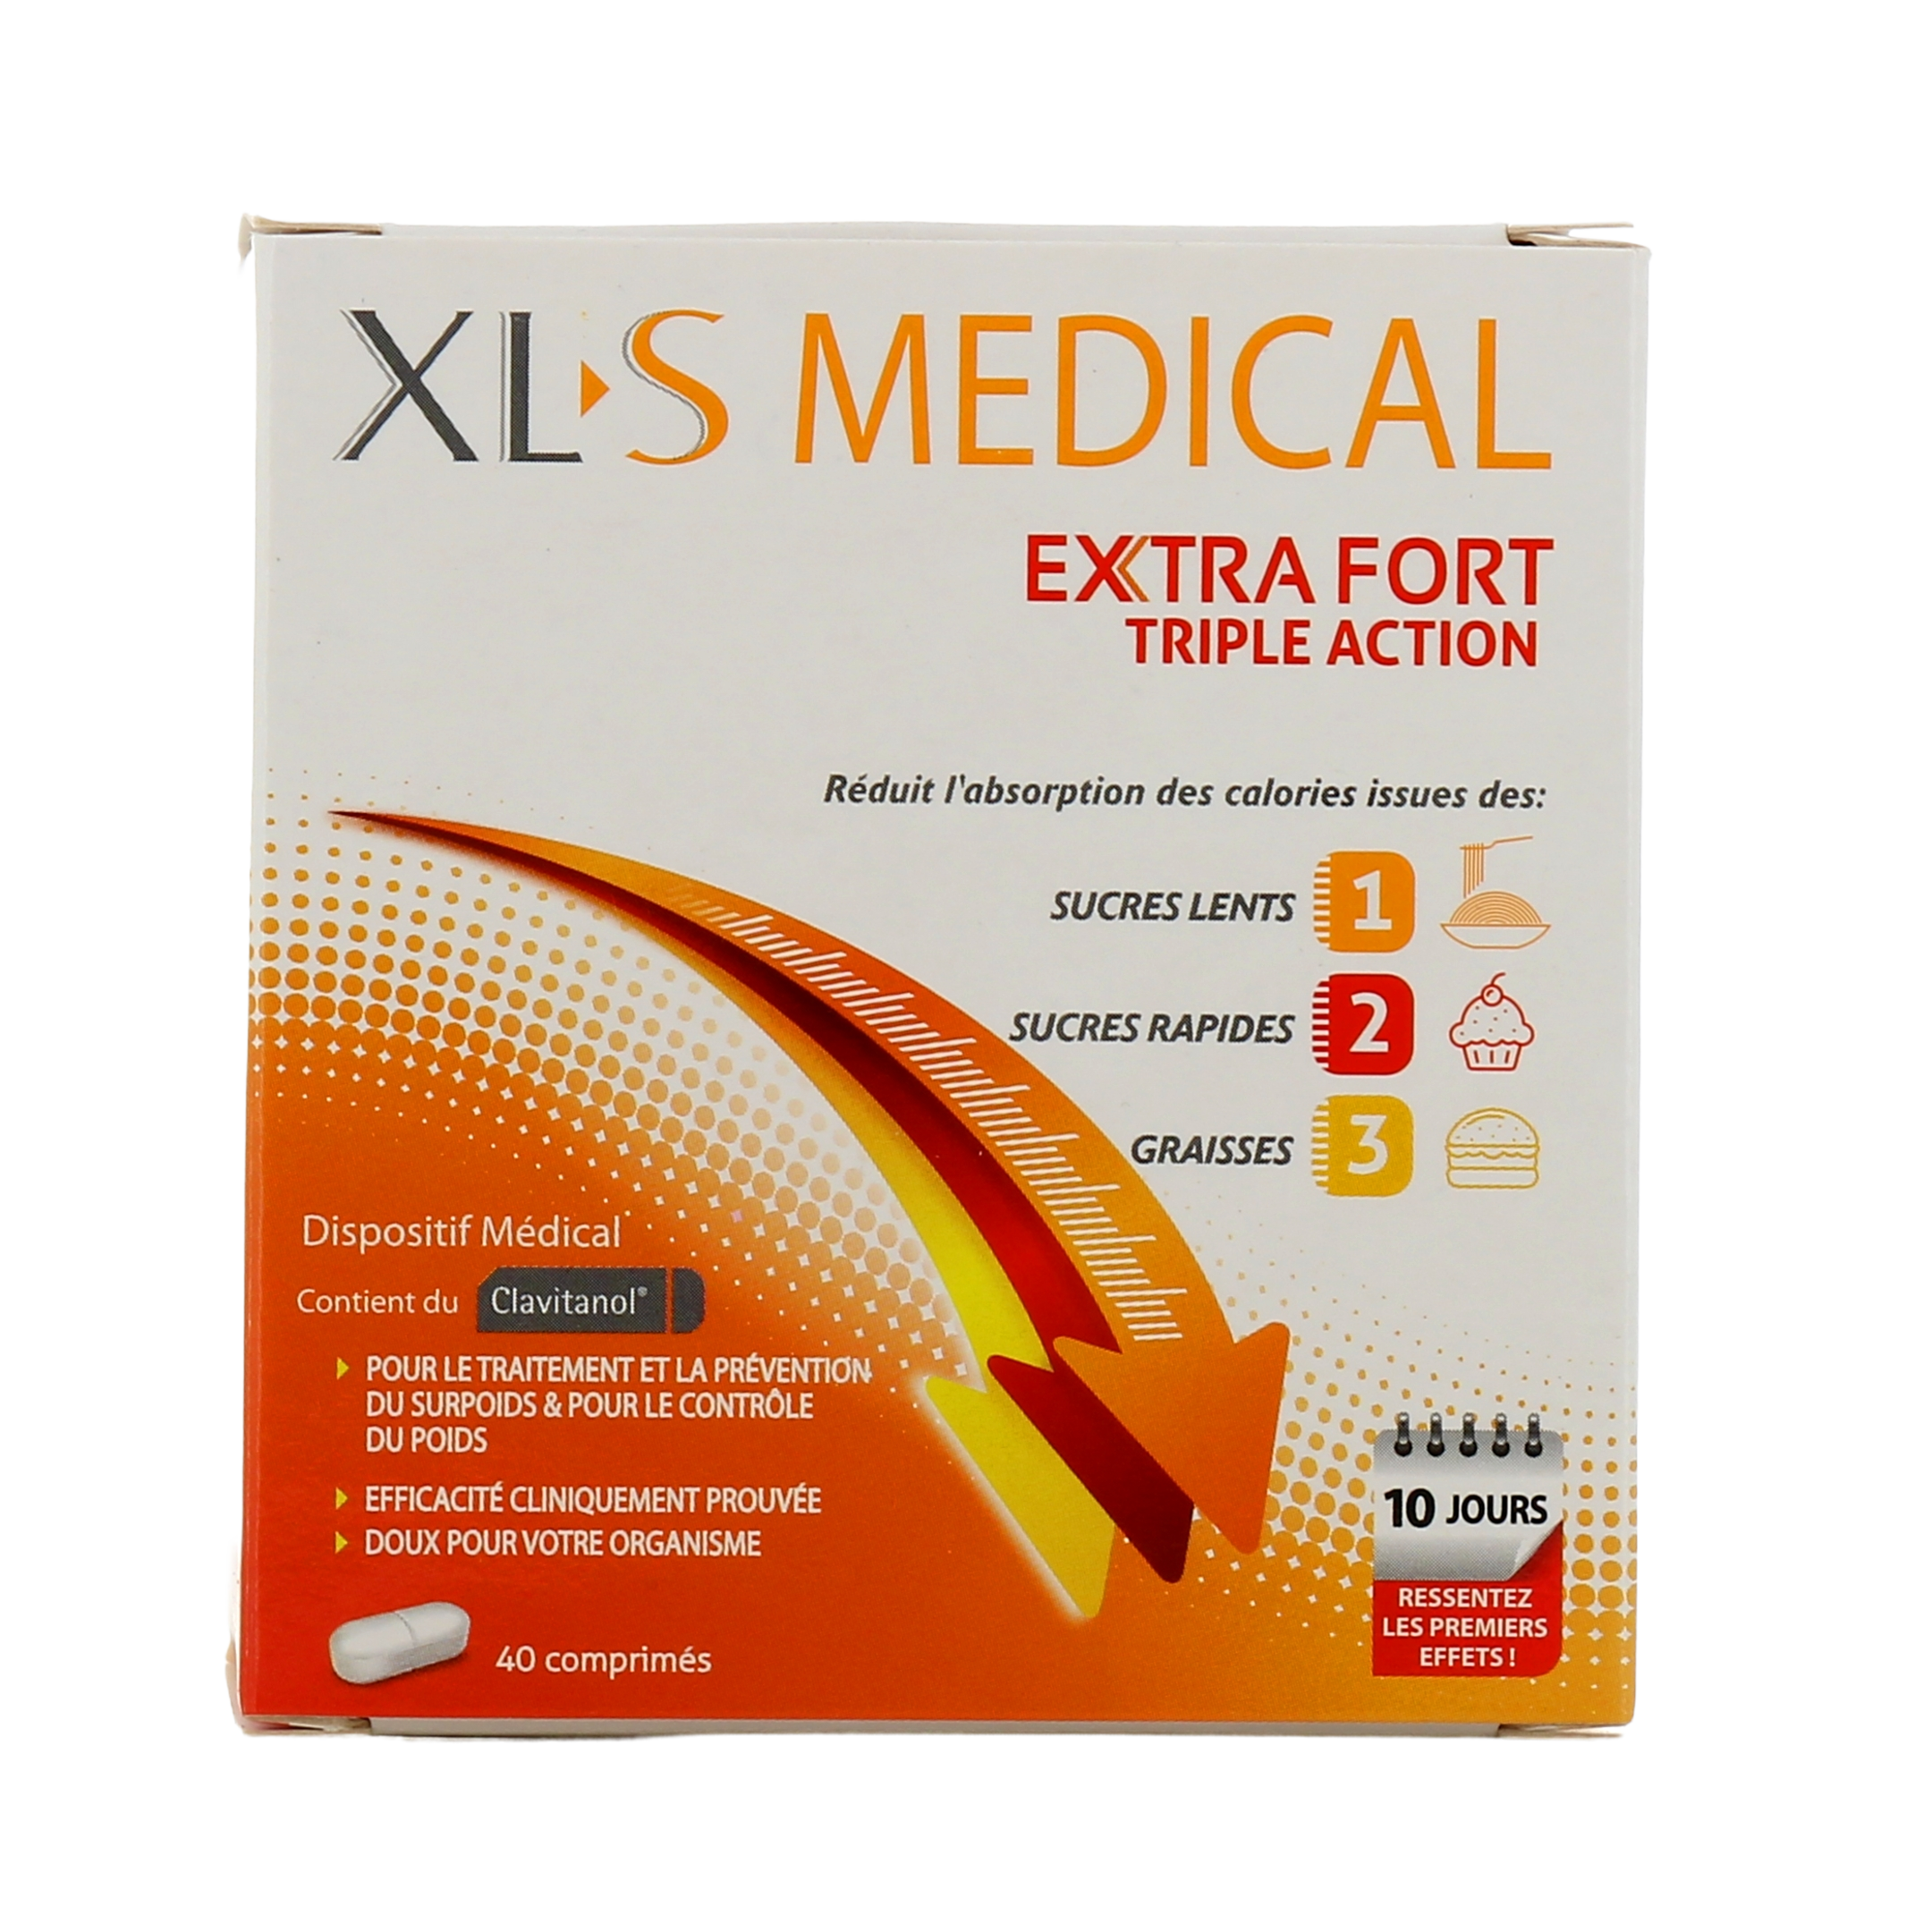 XLS MEDICAL Extra Fort - Pharmacie des Drakkars